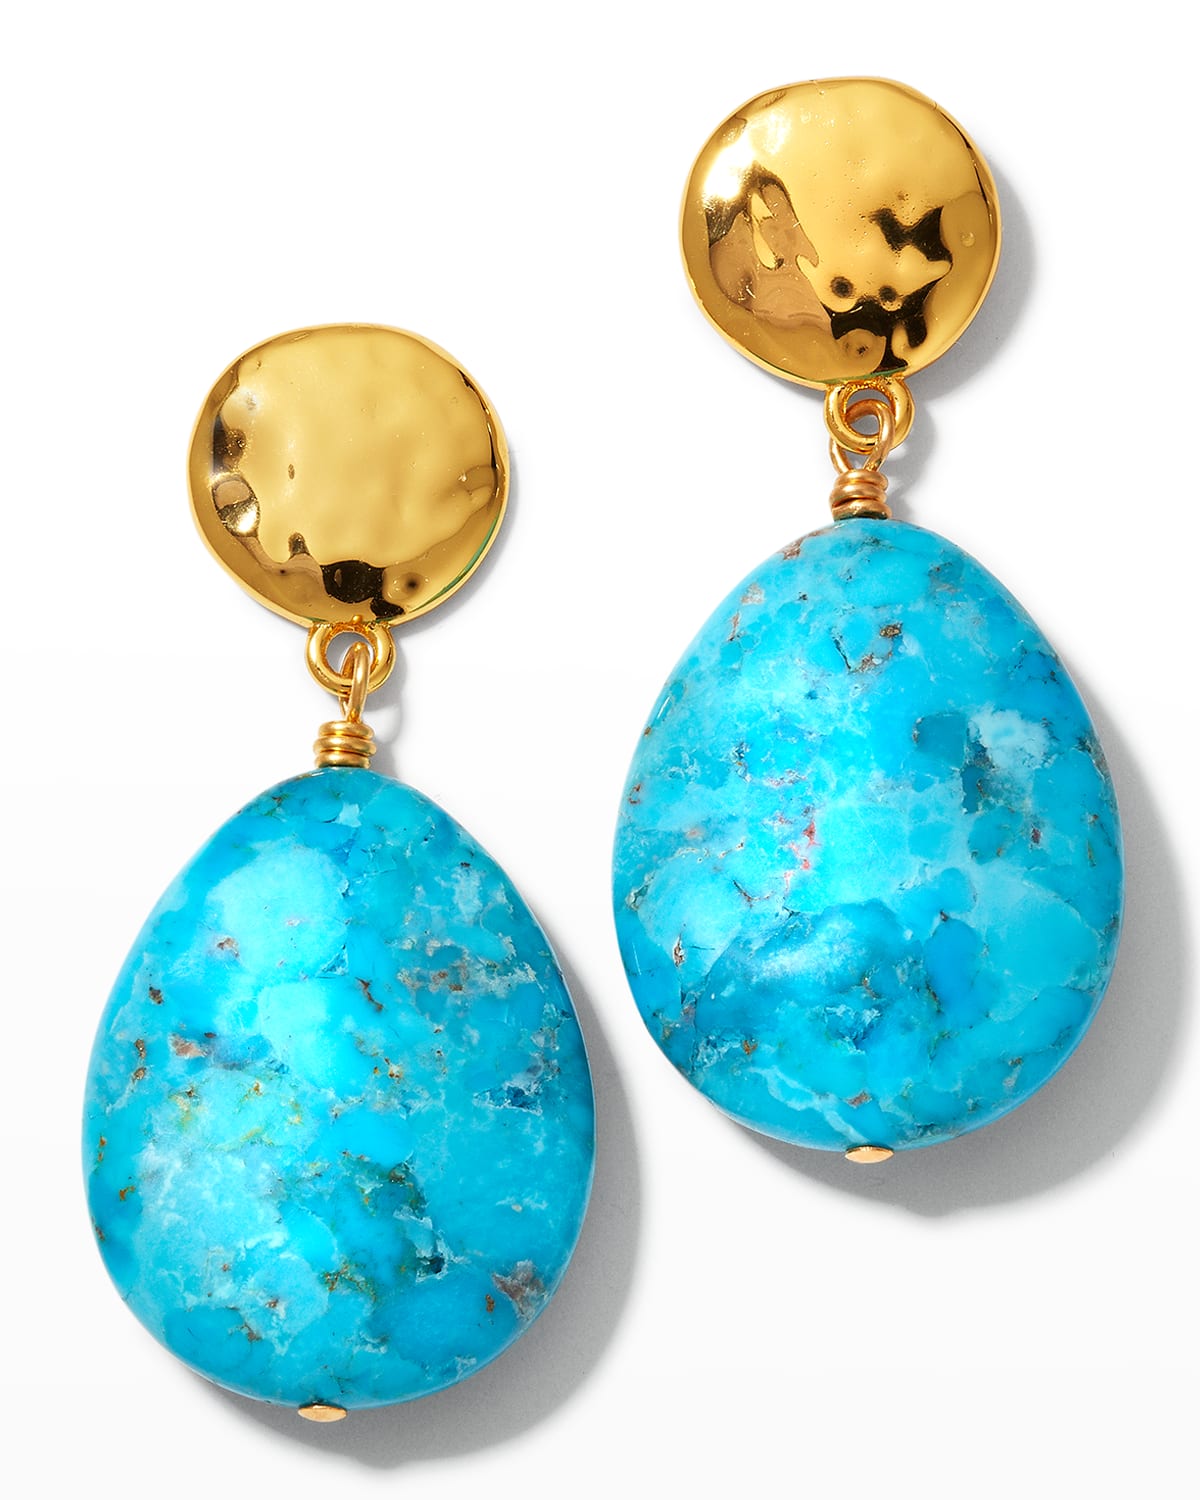 Teal/Turquoise Earrings